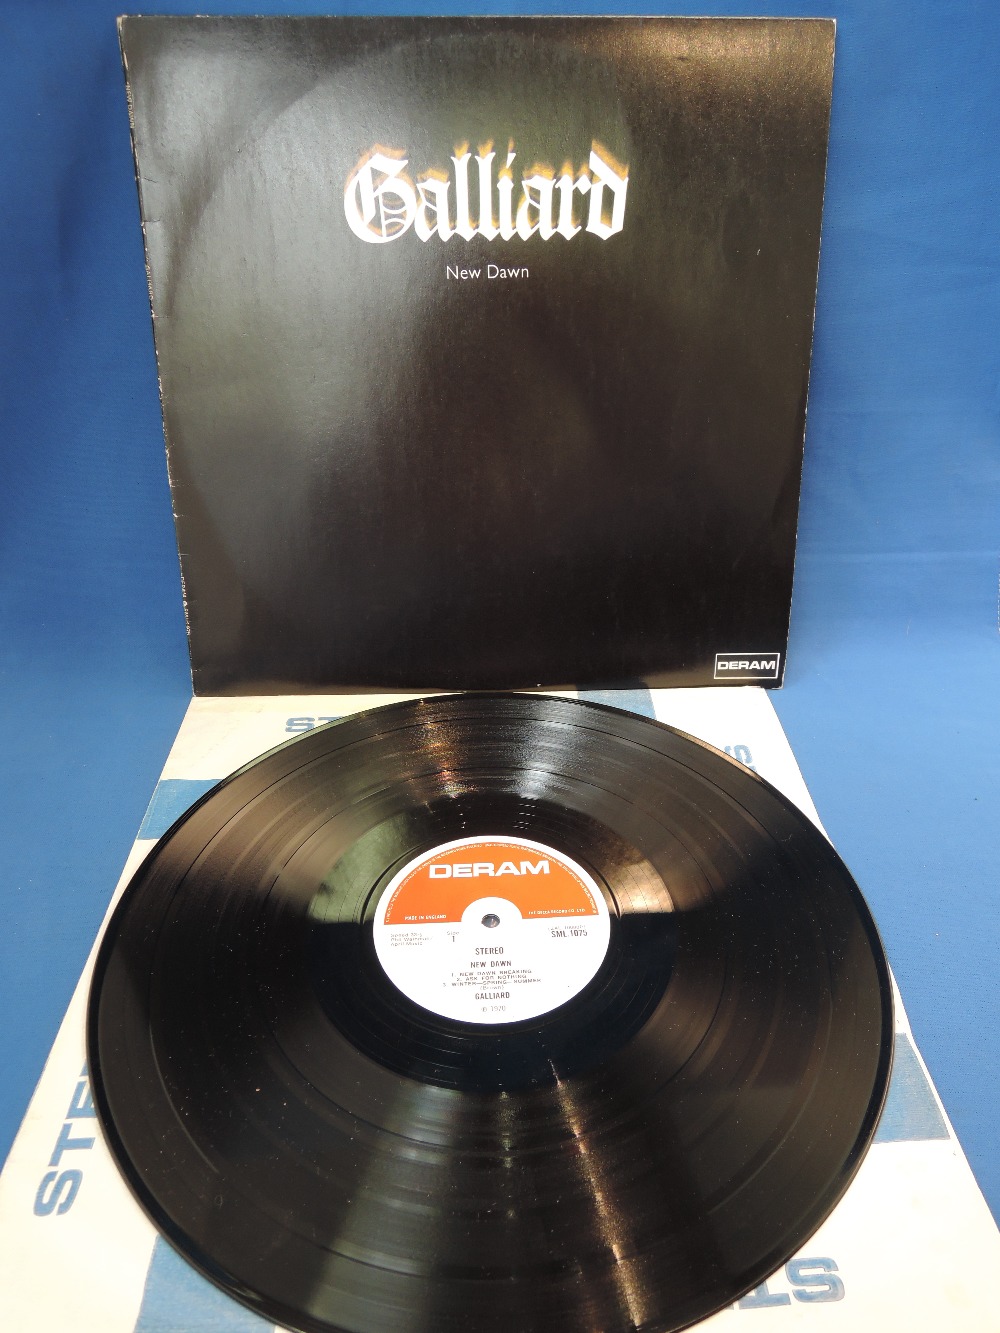 A vinyl LP record, Galliard, New Dawn (DERAM)